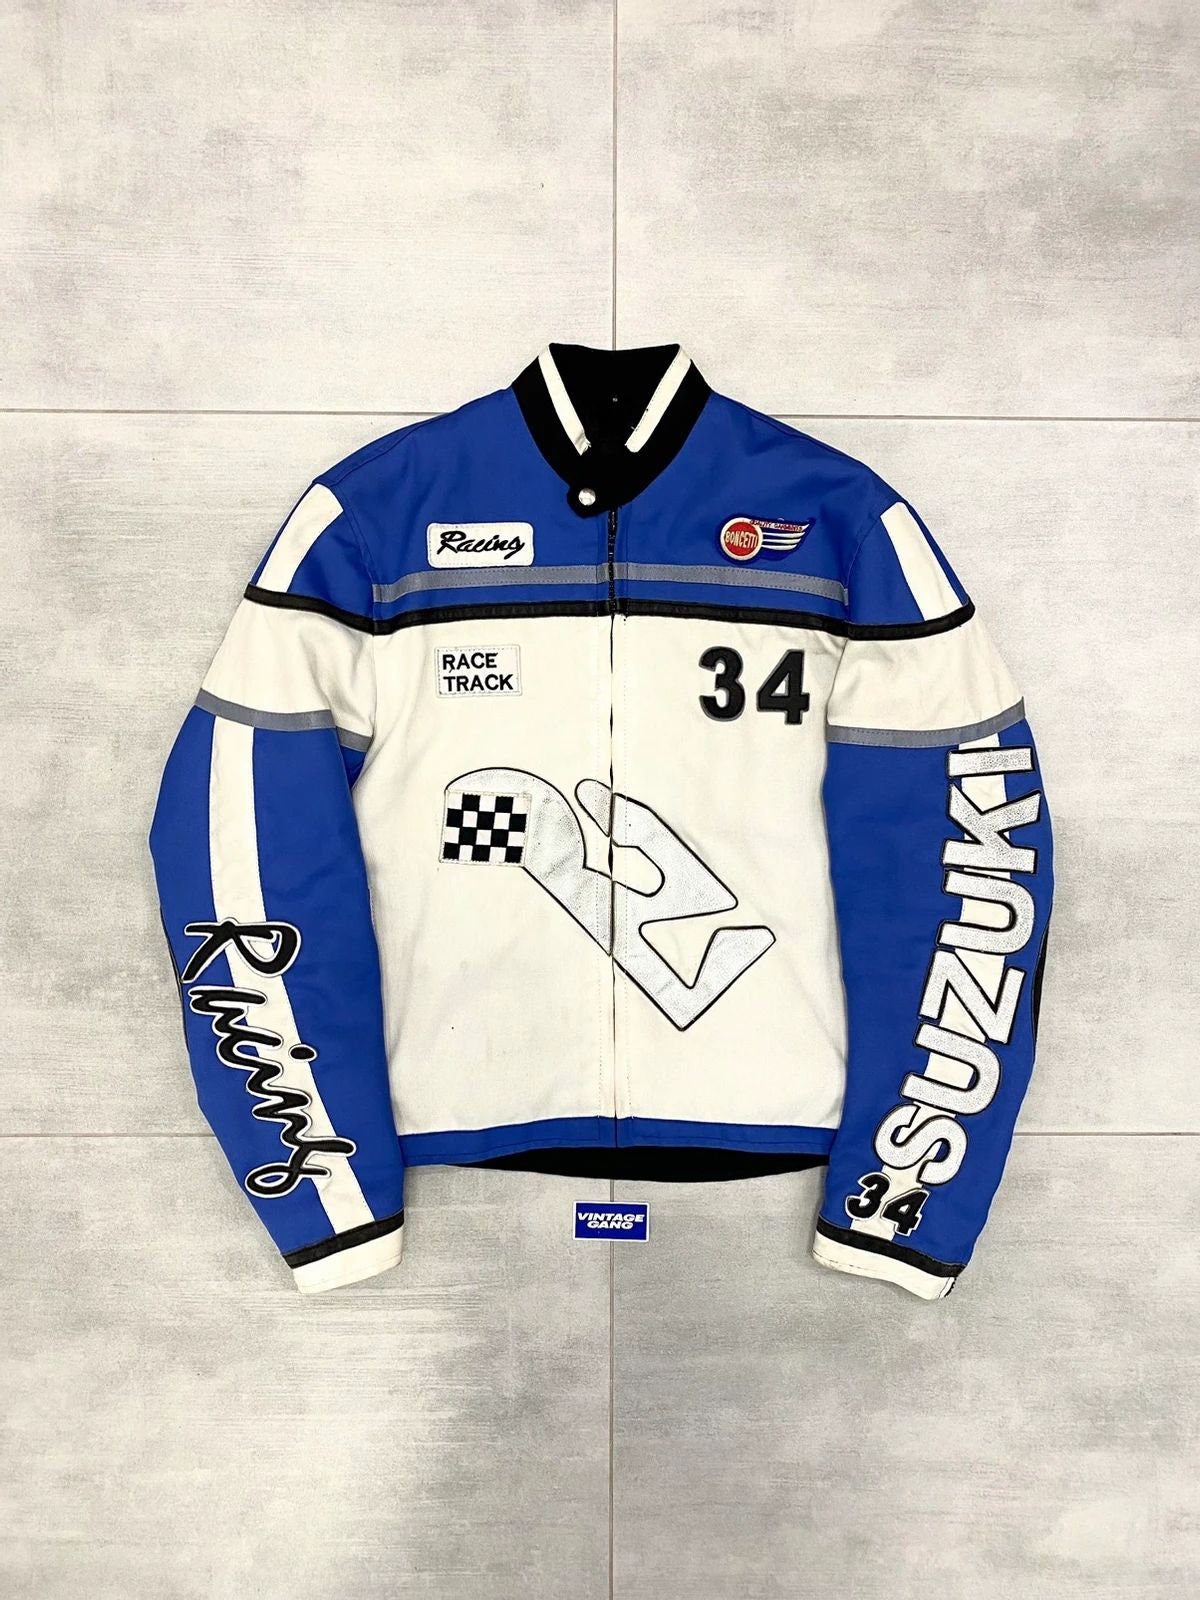 Suzuki racing jacket vintage 90s / bmw / kawasaki / honda / | Etsy